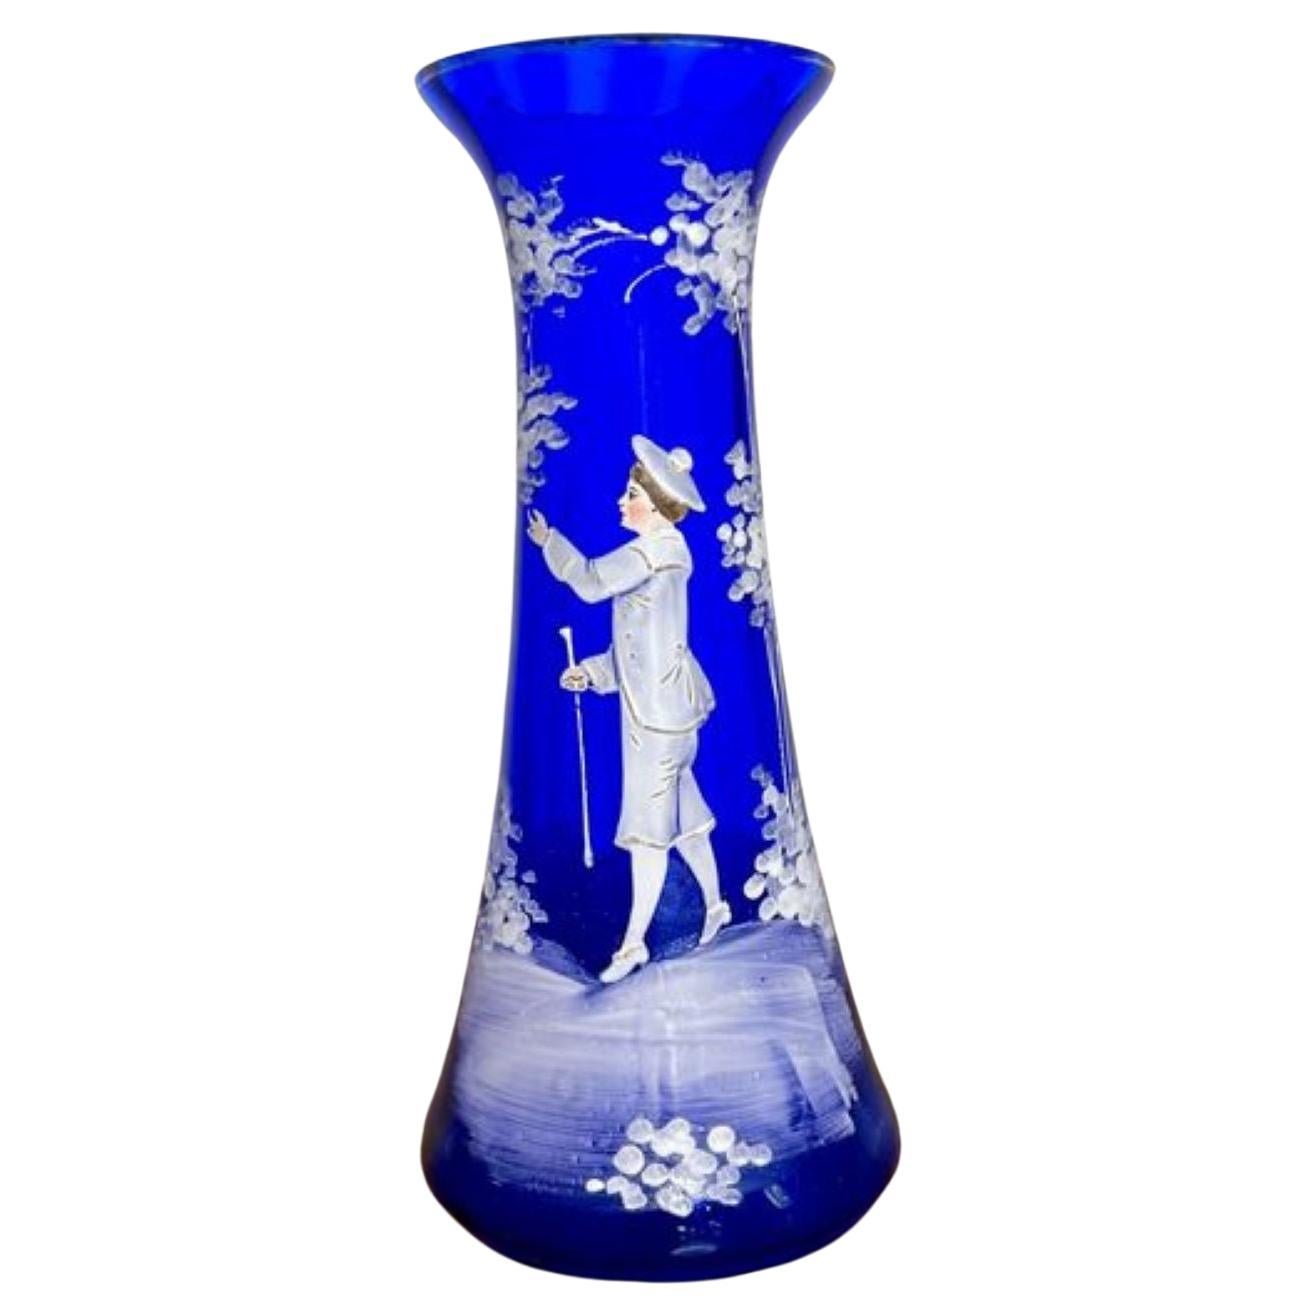 Superbe vase ancien en verre bleu Mary Gregory de qualité en vente